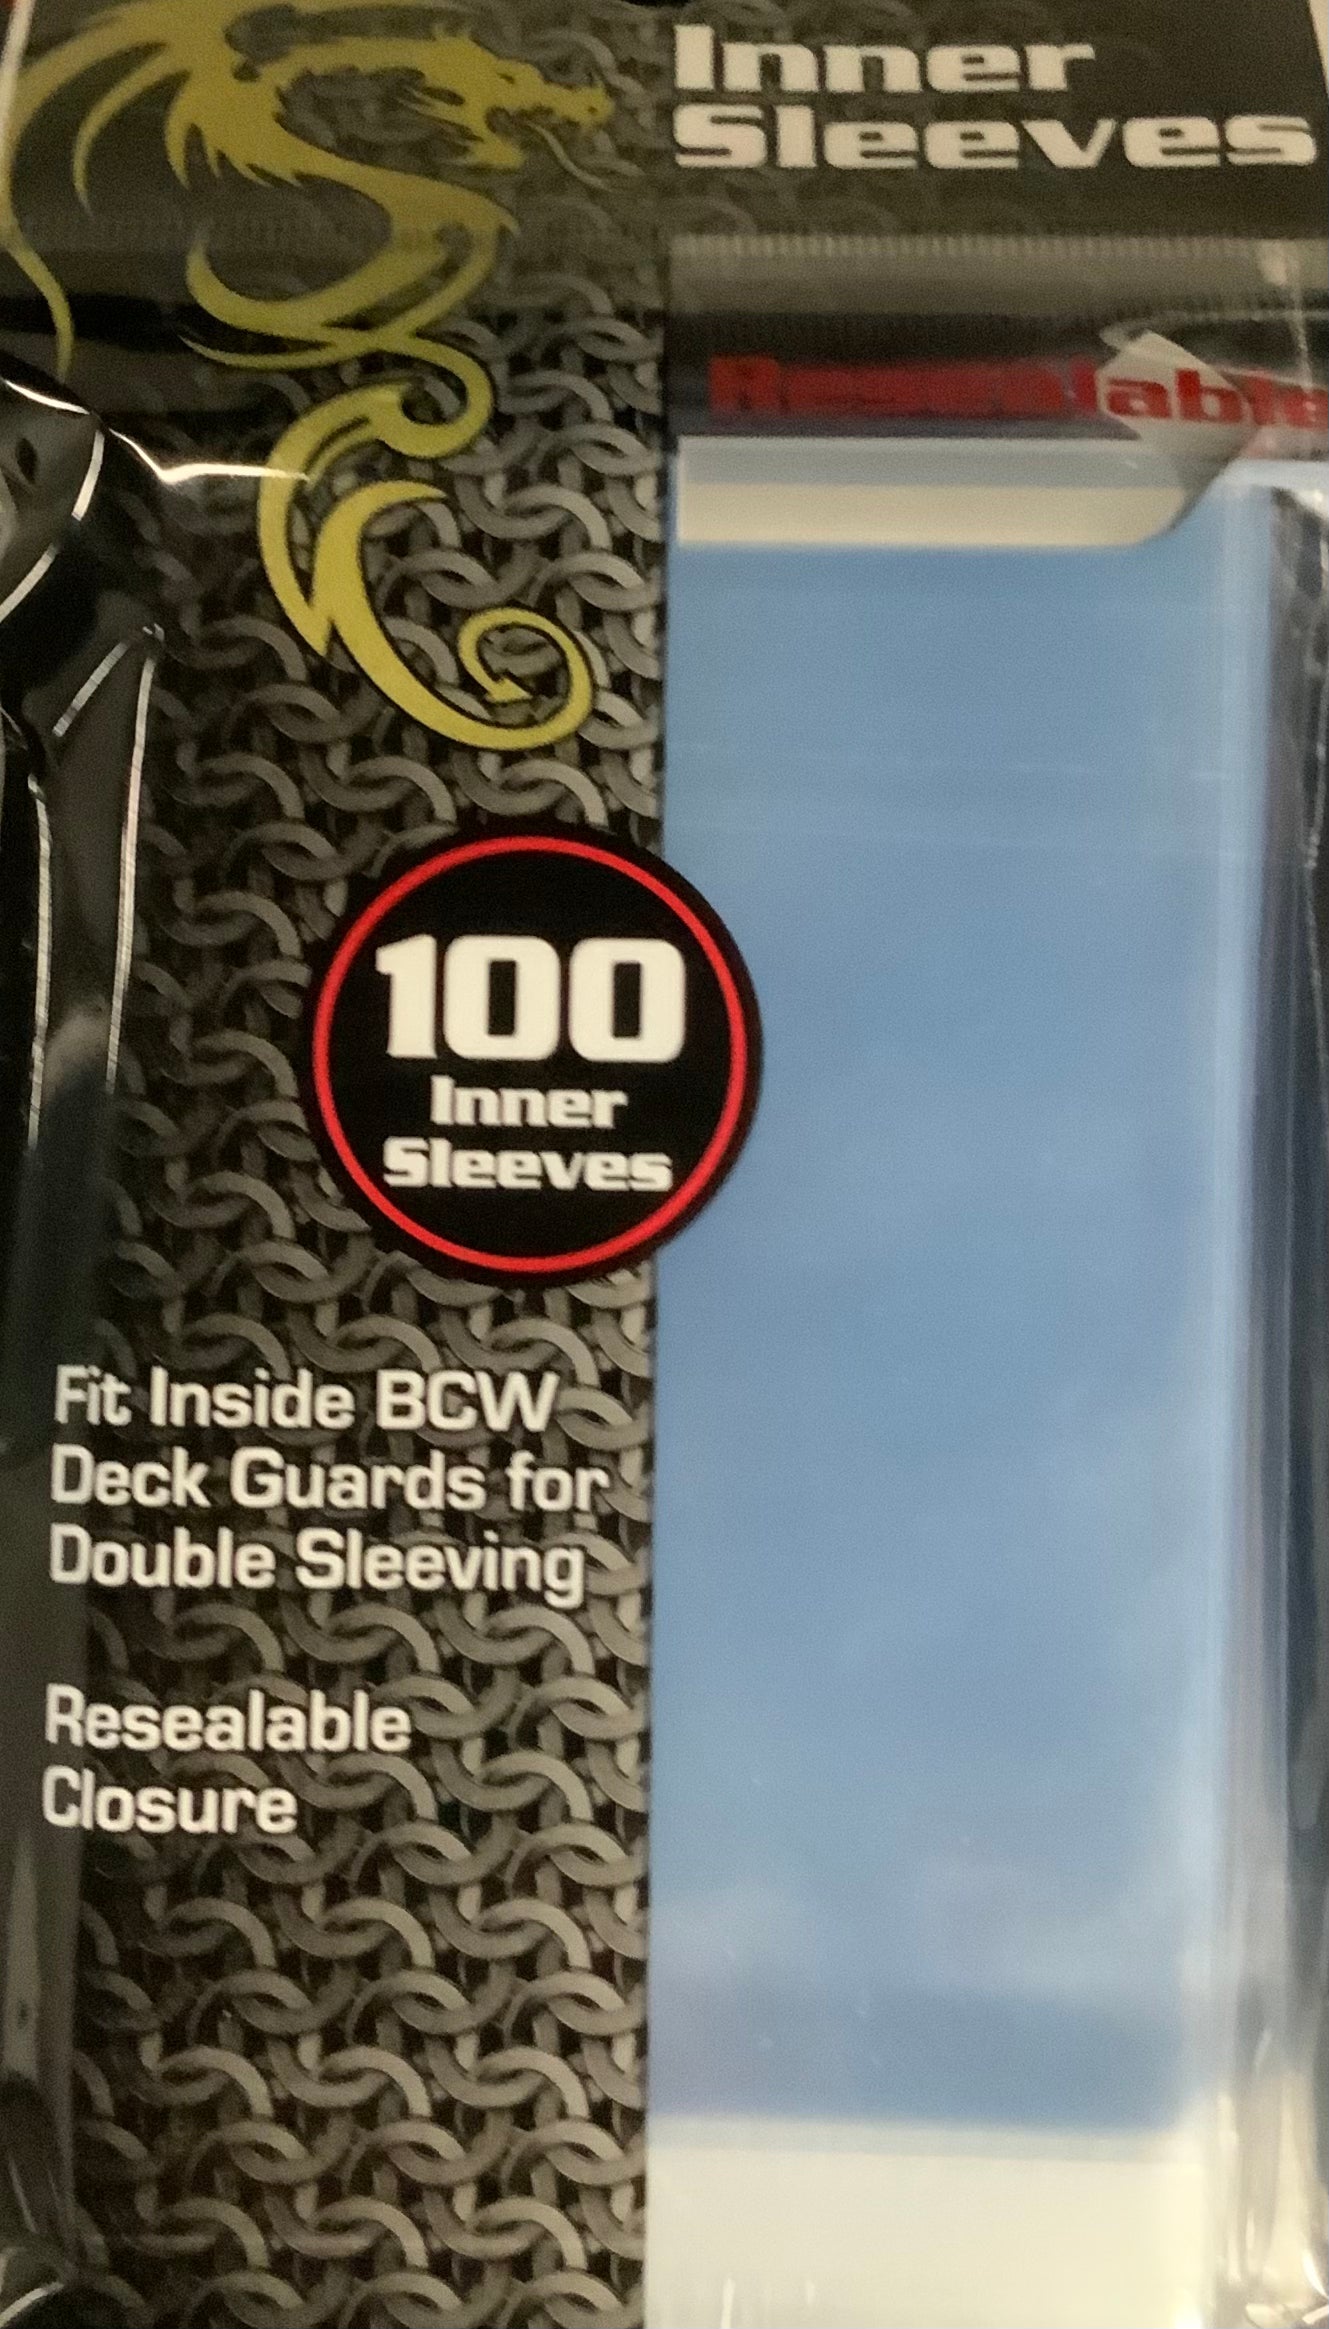 100 inner sleeves